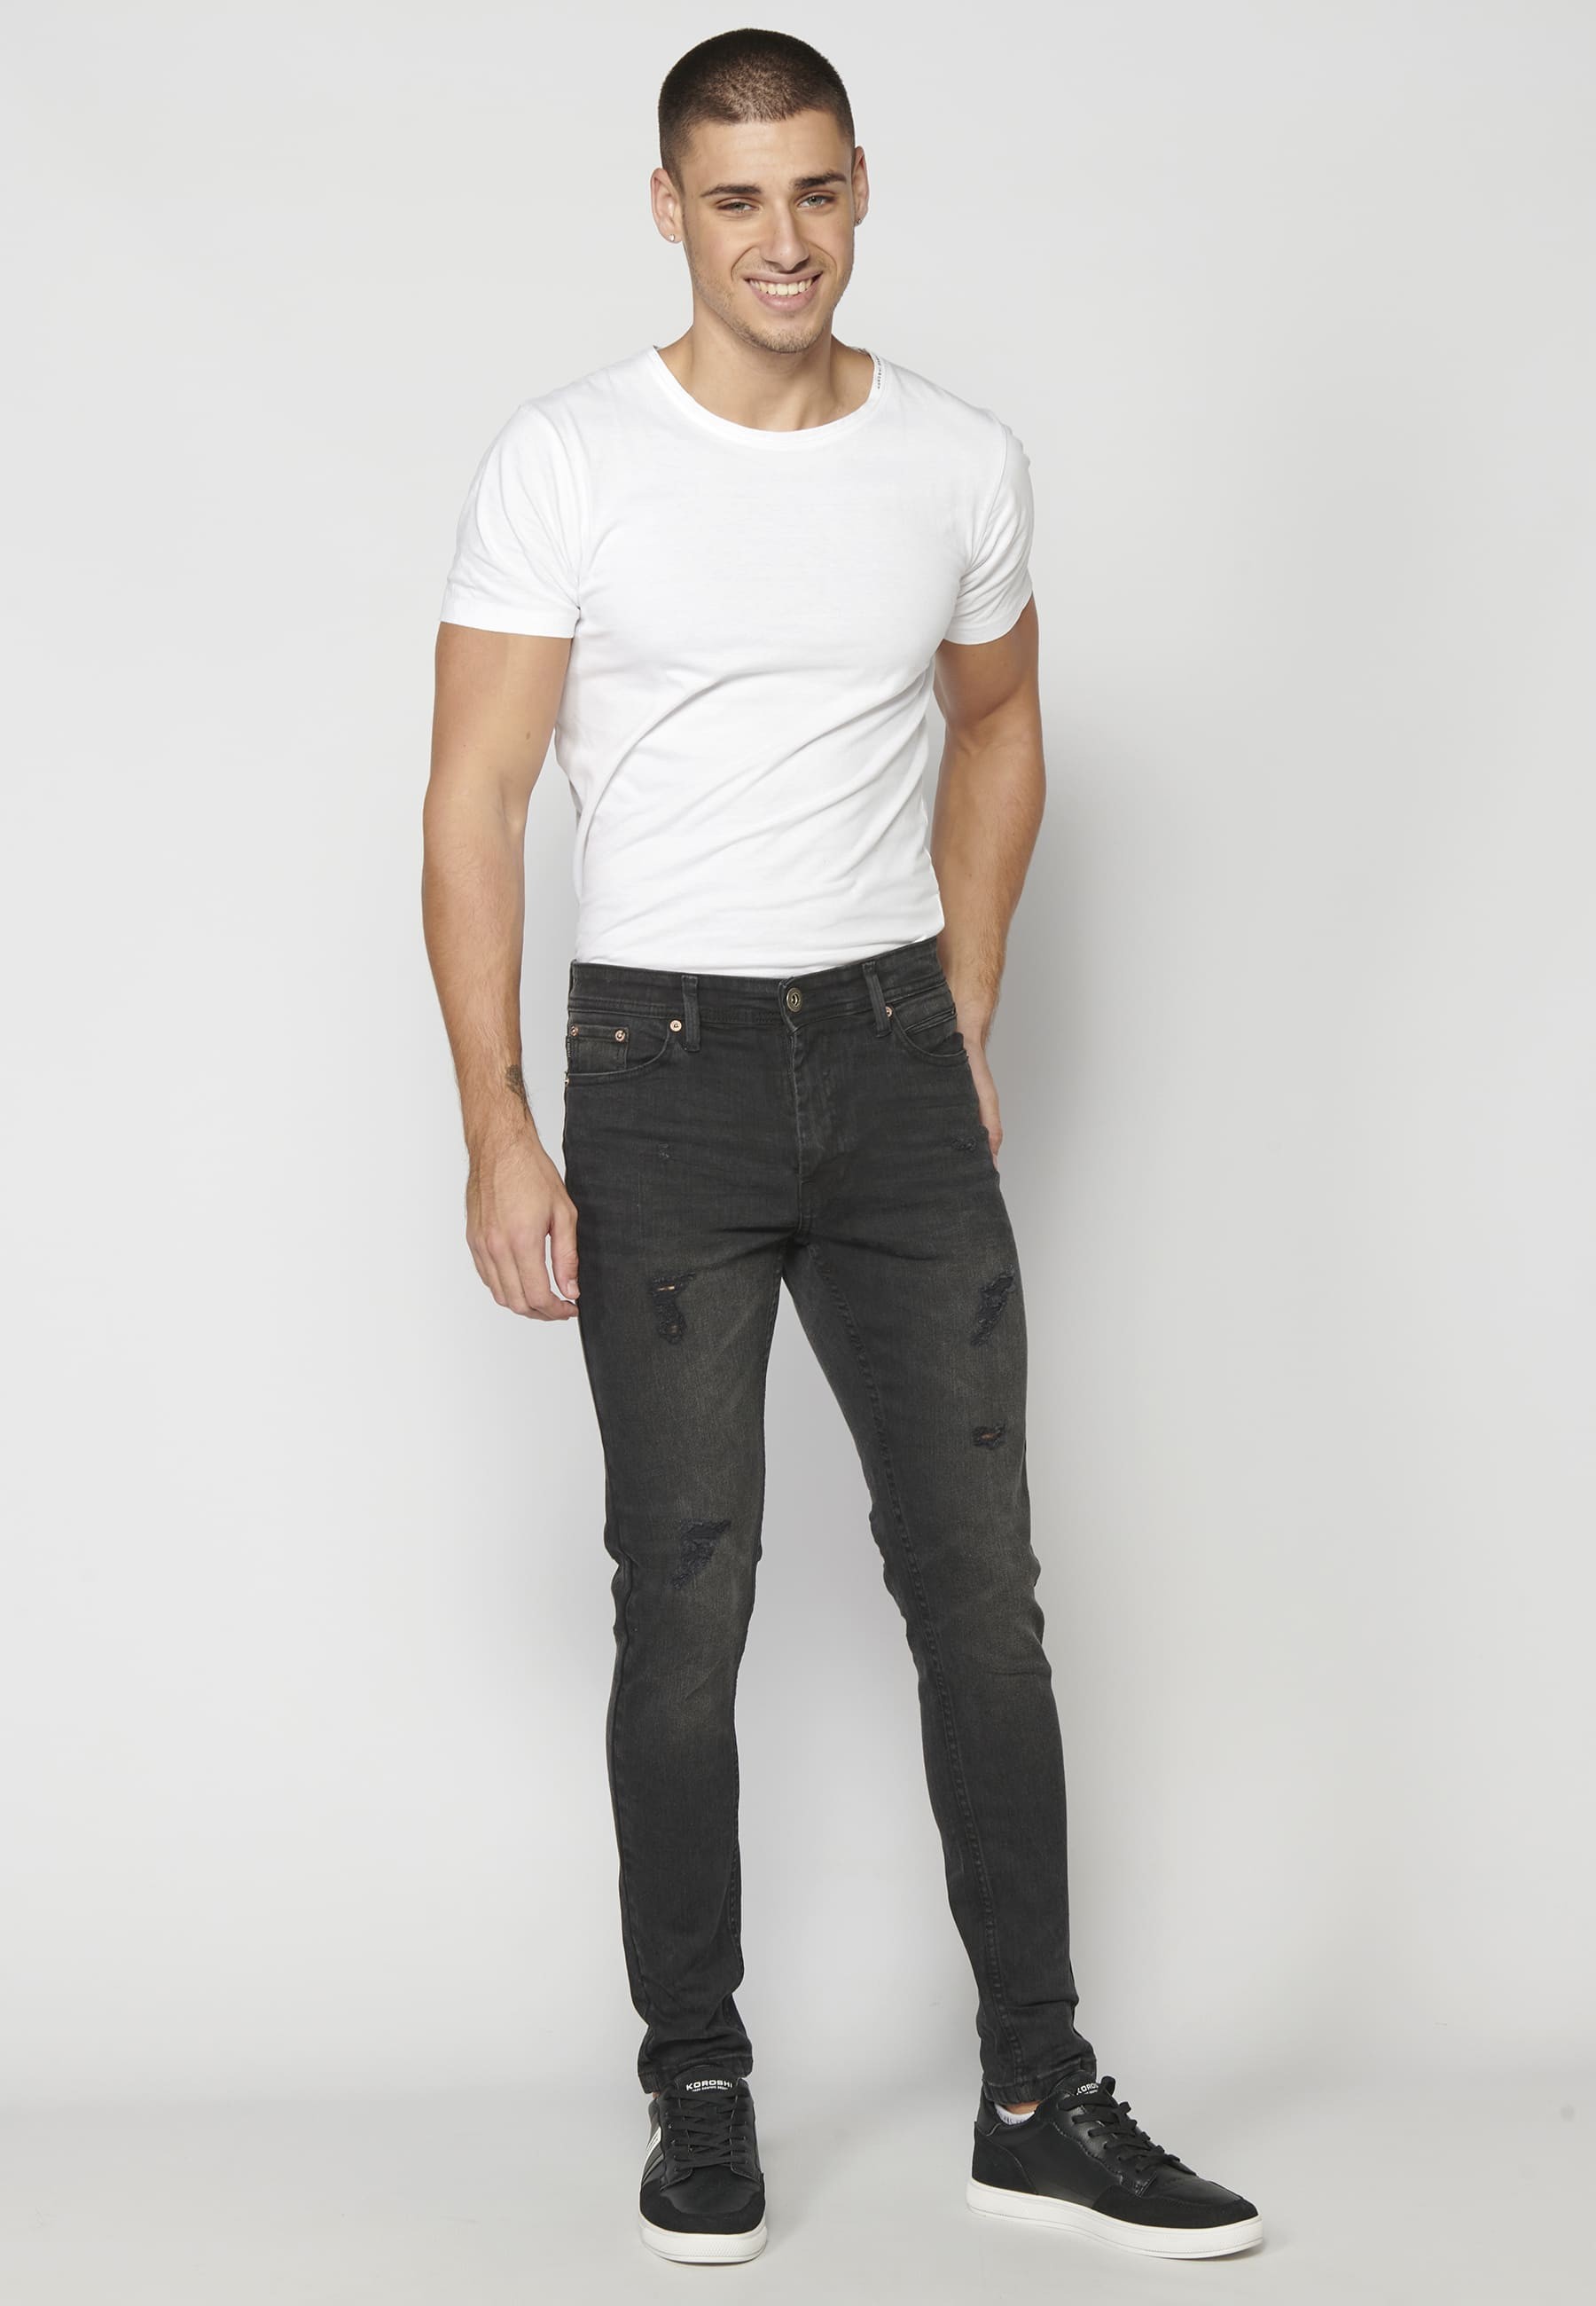 Black super skinny denim jean pants for Men